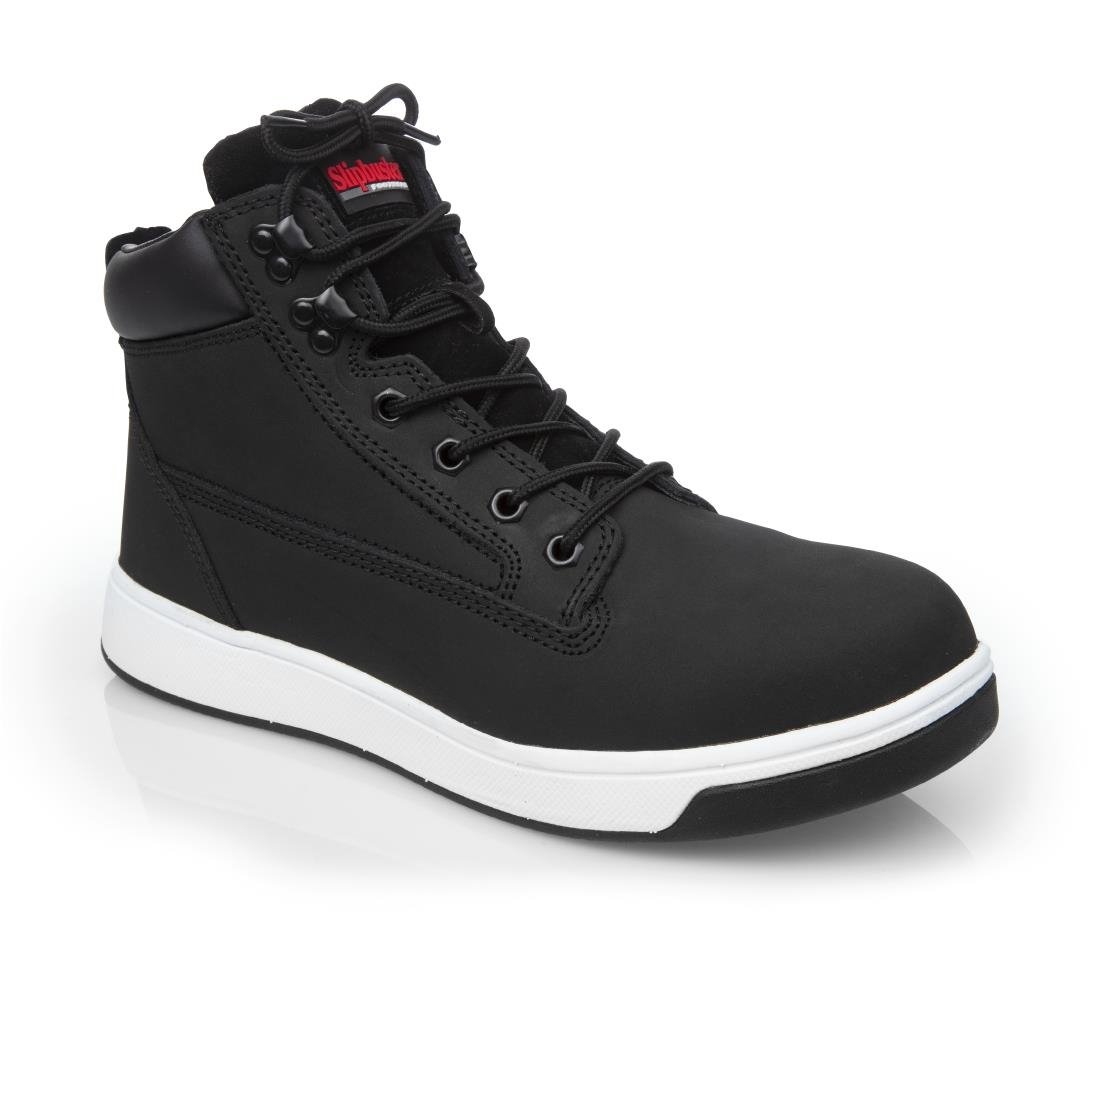 BB422-44 Slipbuster Sneaker Boots Black 44 JD Catering Equipment Solutions Ltd